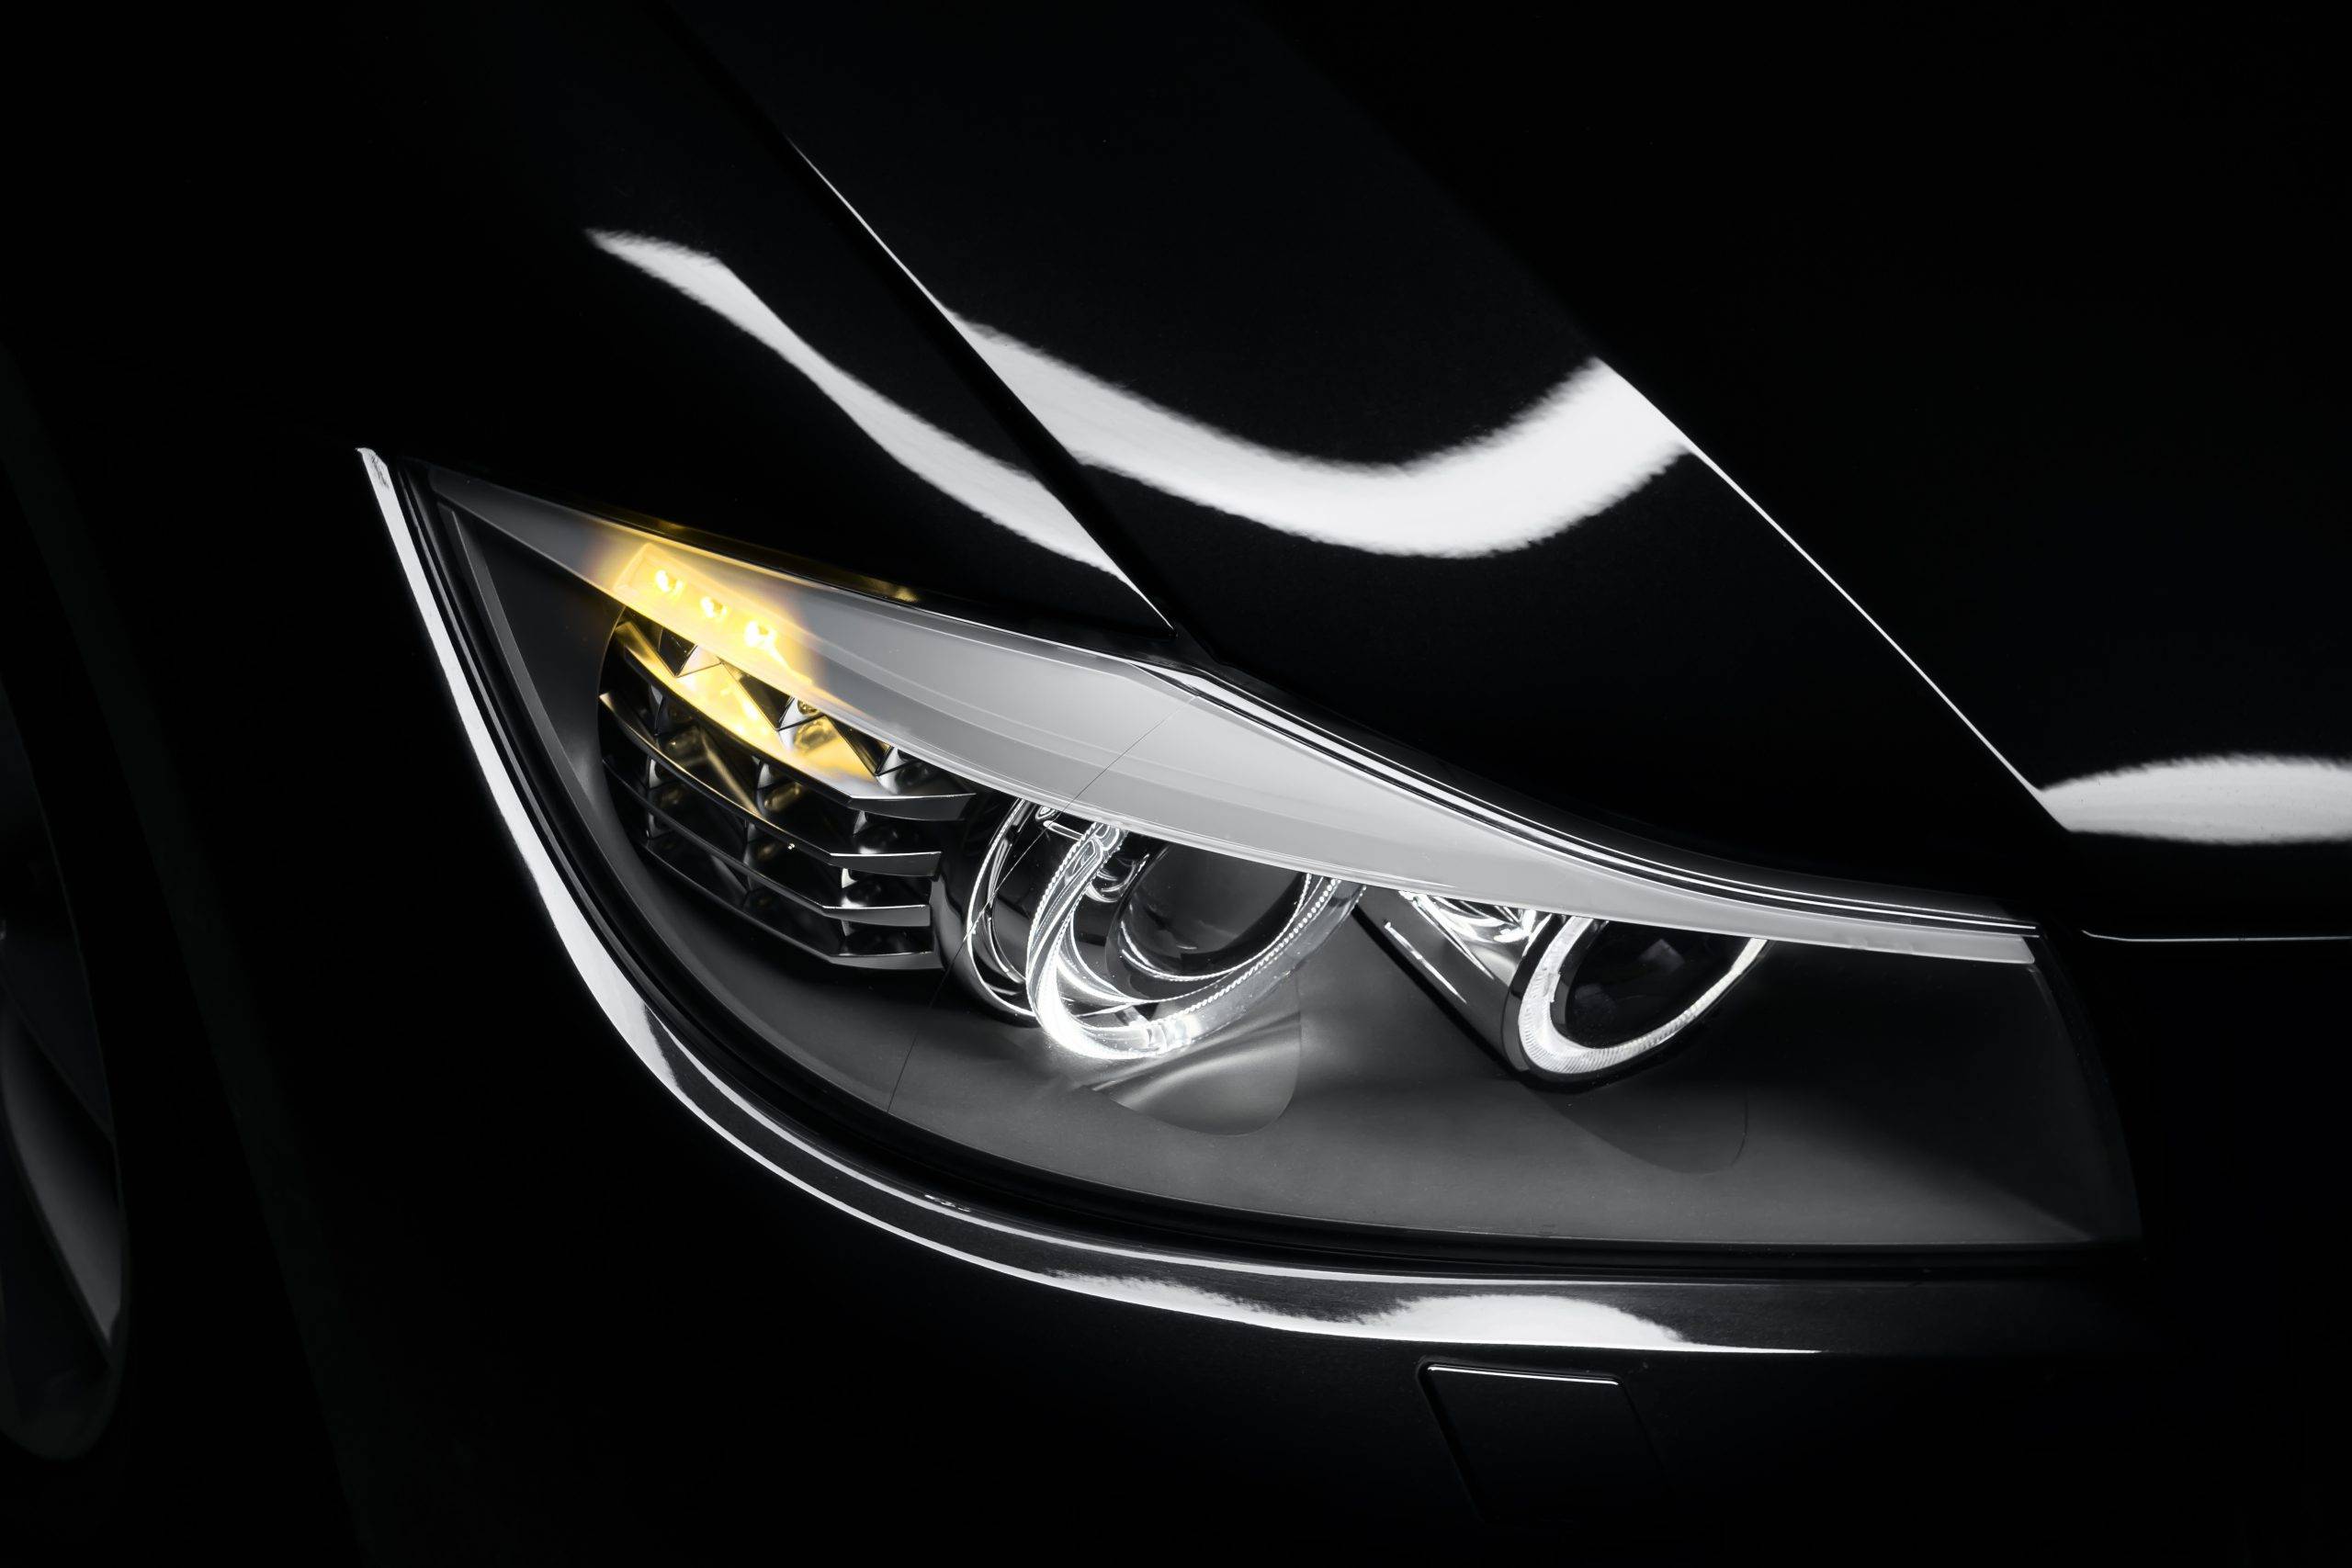 Headlight lamp of black modern car, close-up